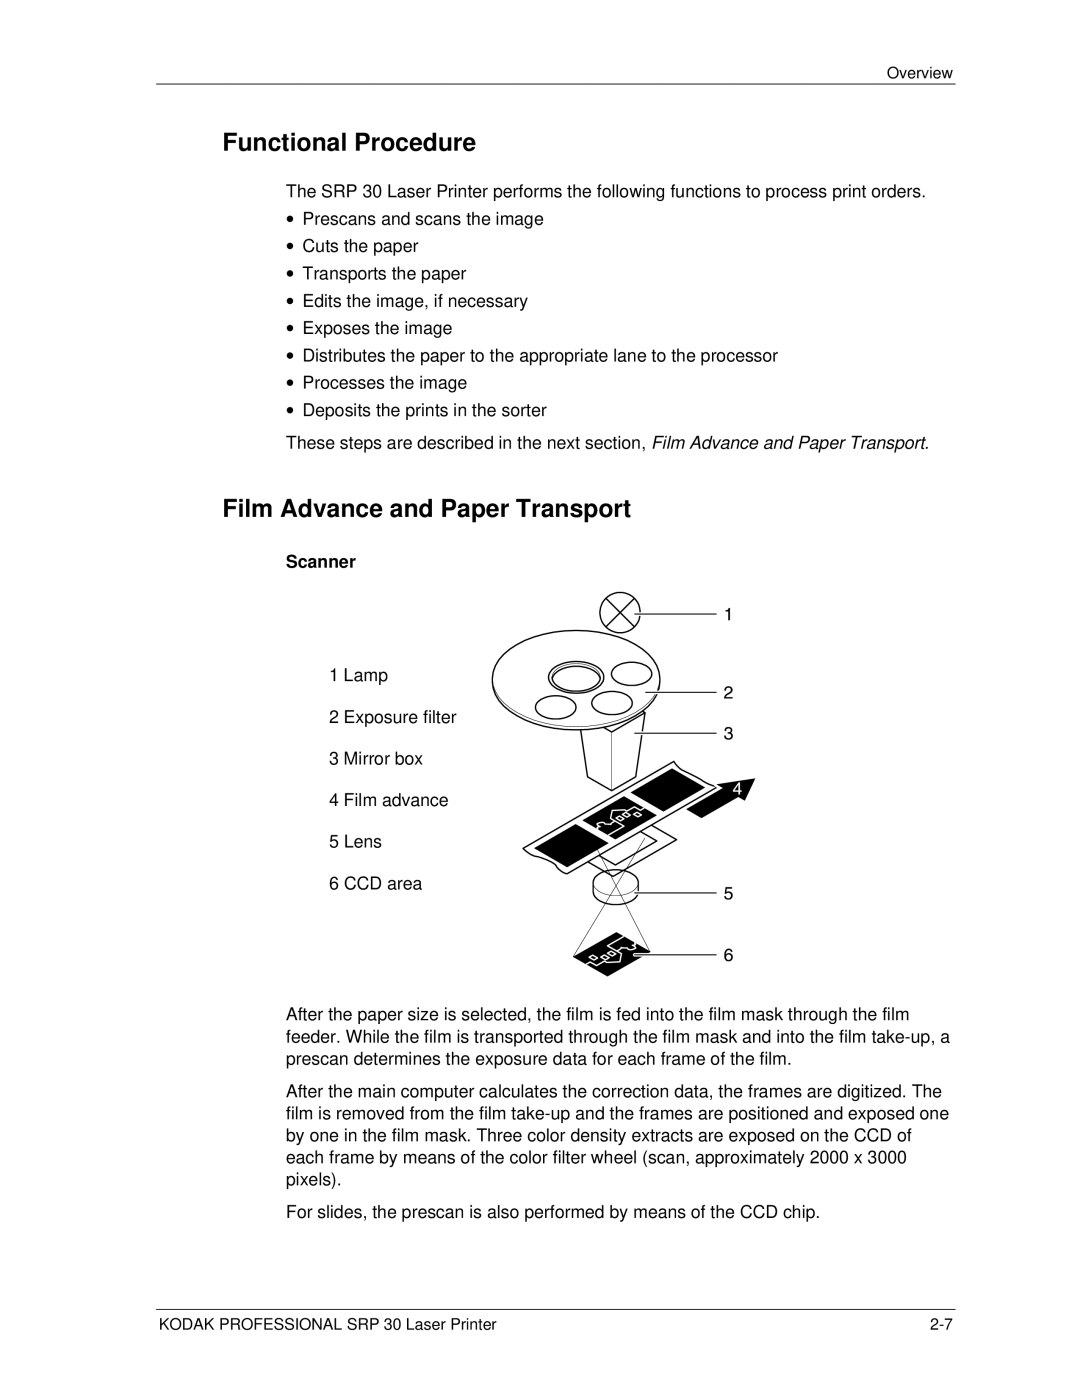 Kodak SRP 30 manual Functional Procedure, Film Advance and Paper Transport, Scanner 